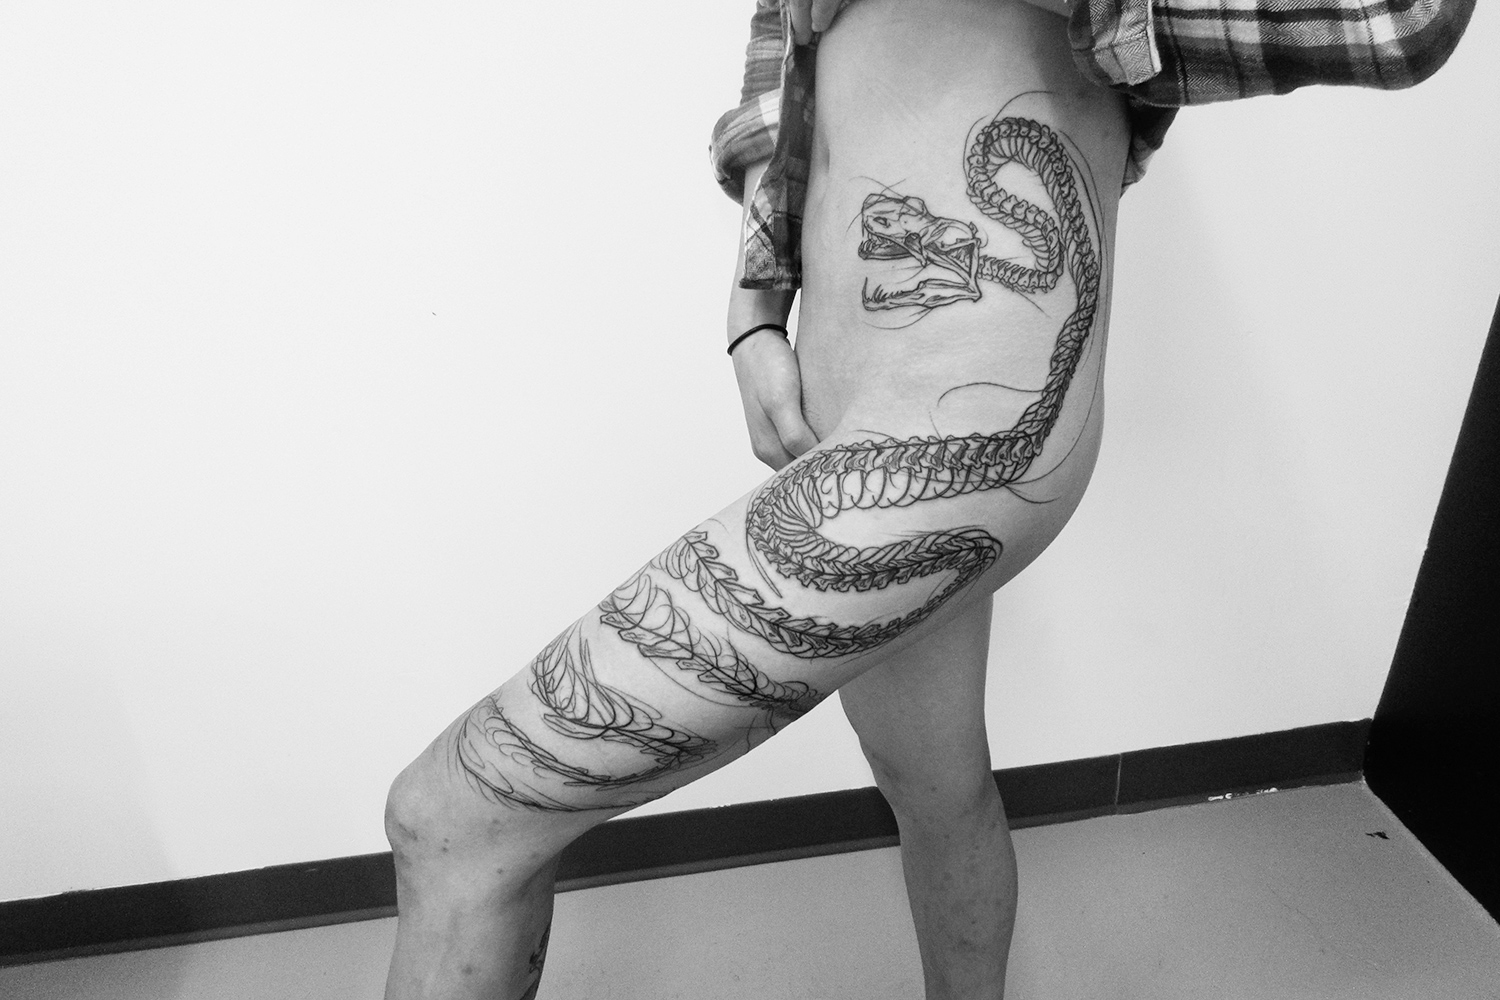 Katakankabin, Art Tattoo Montreal Show - skeletal boa tattoo